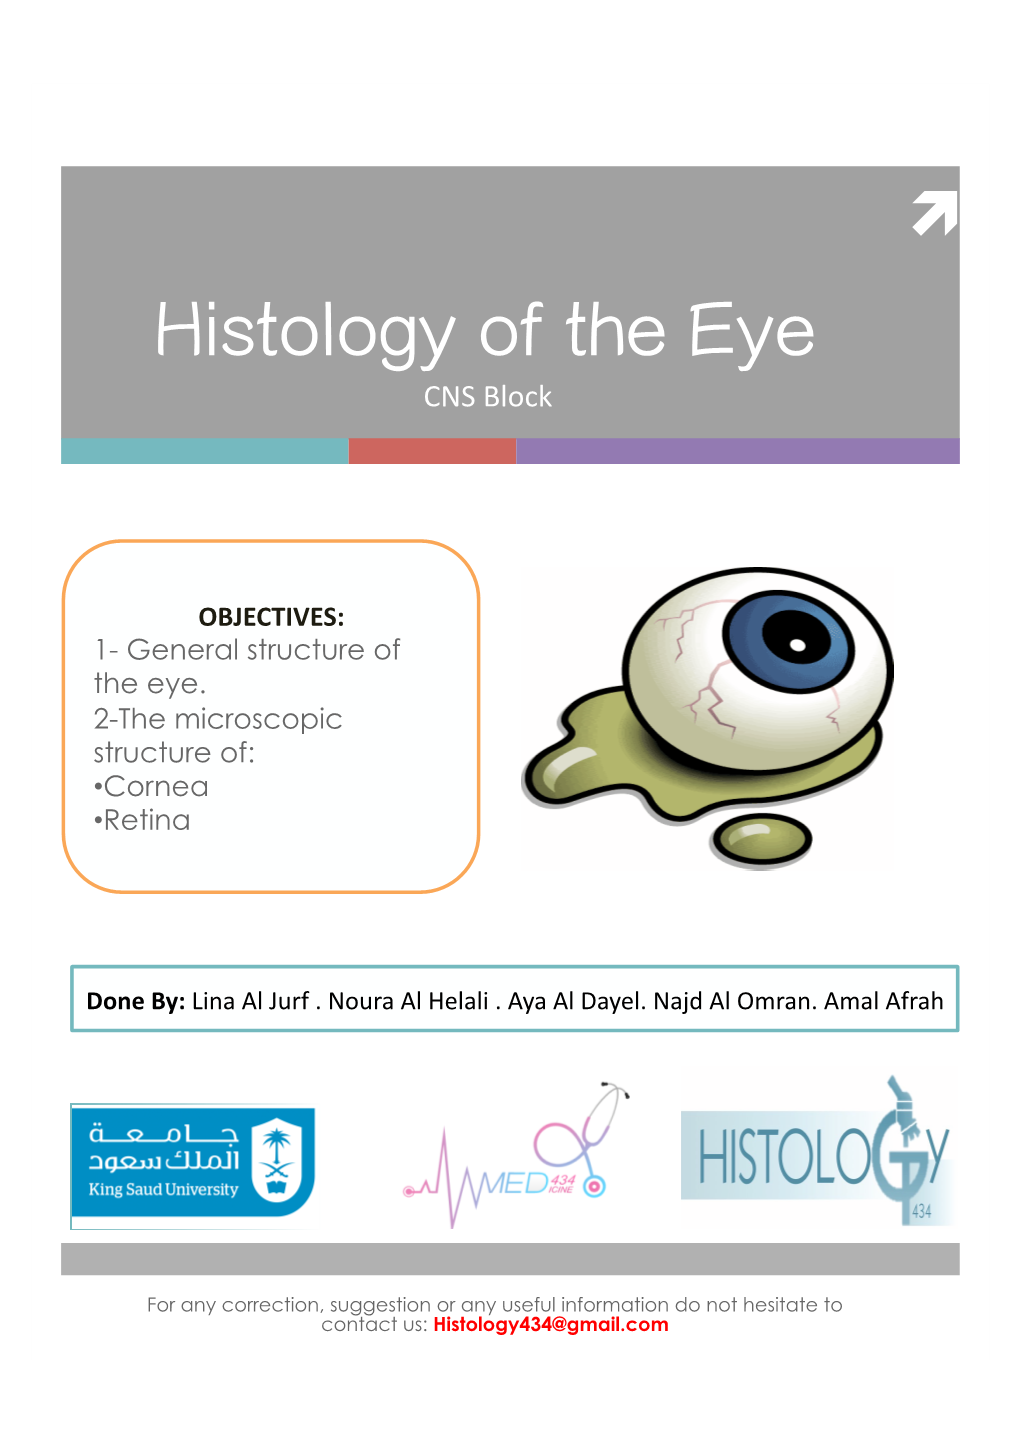 Histology of the Eye CNS Block